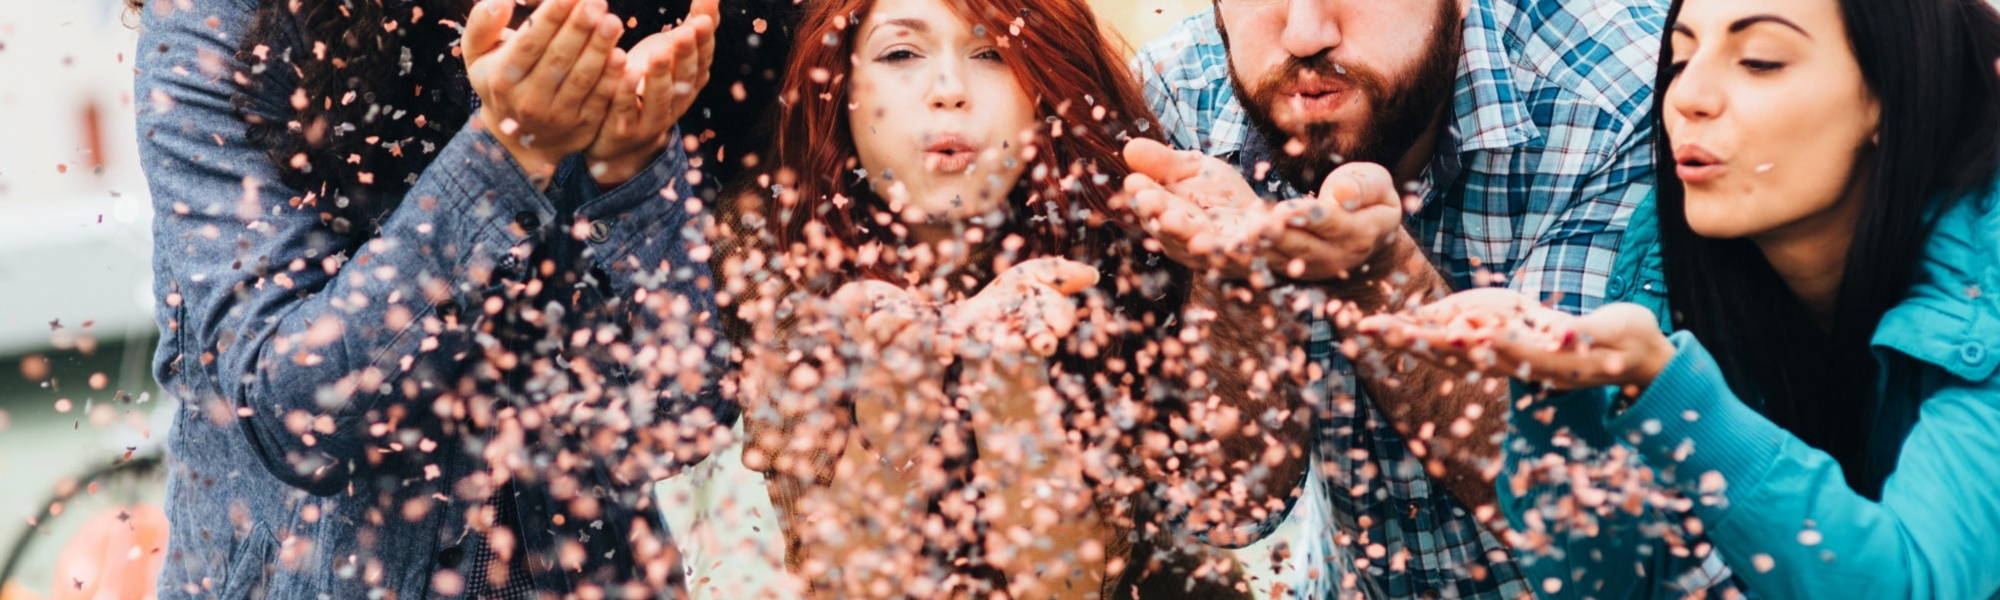 Team of millennials blowing glitter confetti